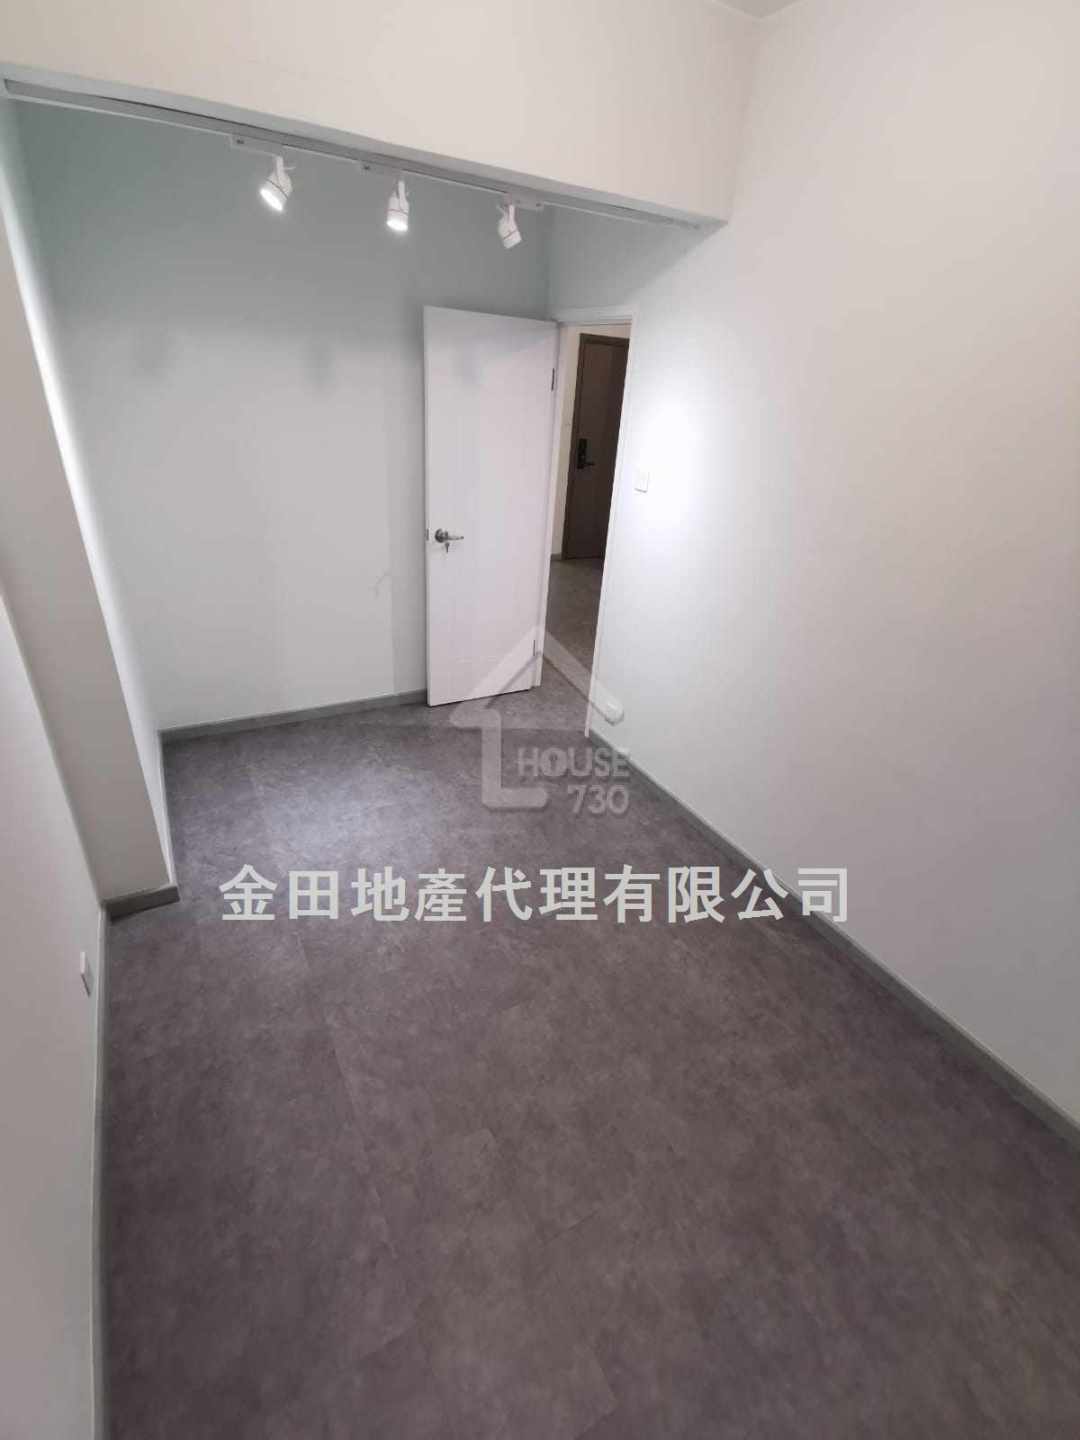 Causeway Bay ISLAND BUILDING Lower Floor Master Room House730-6282622